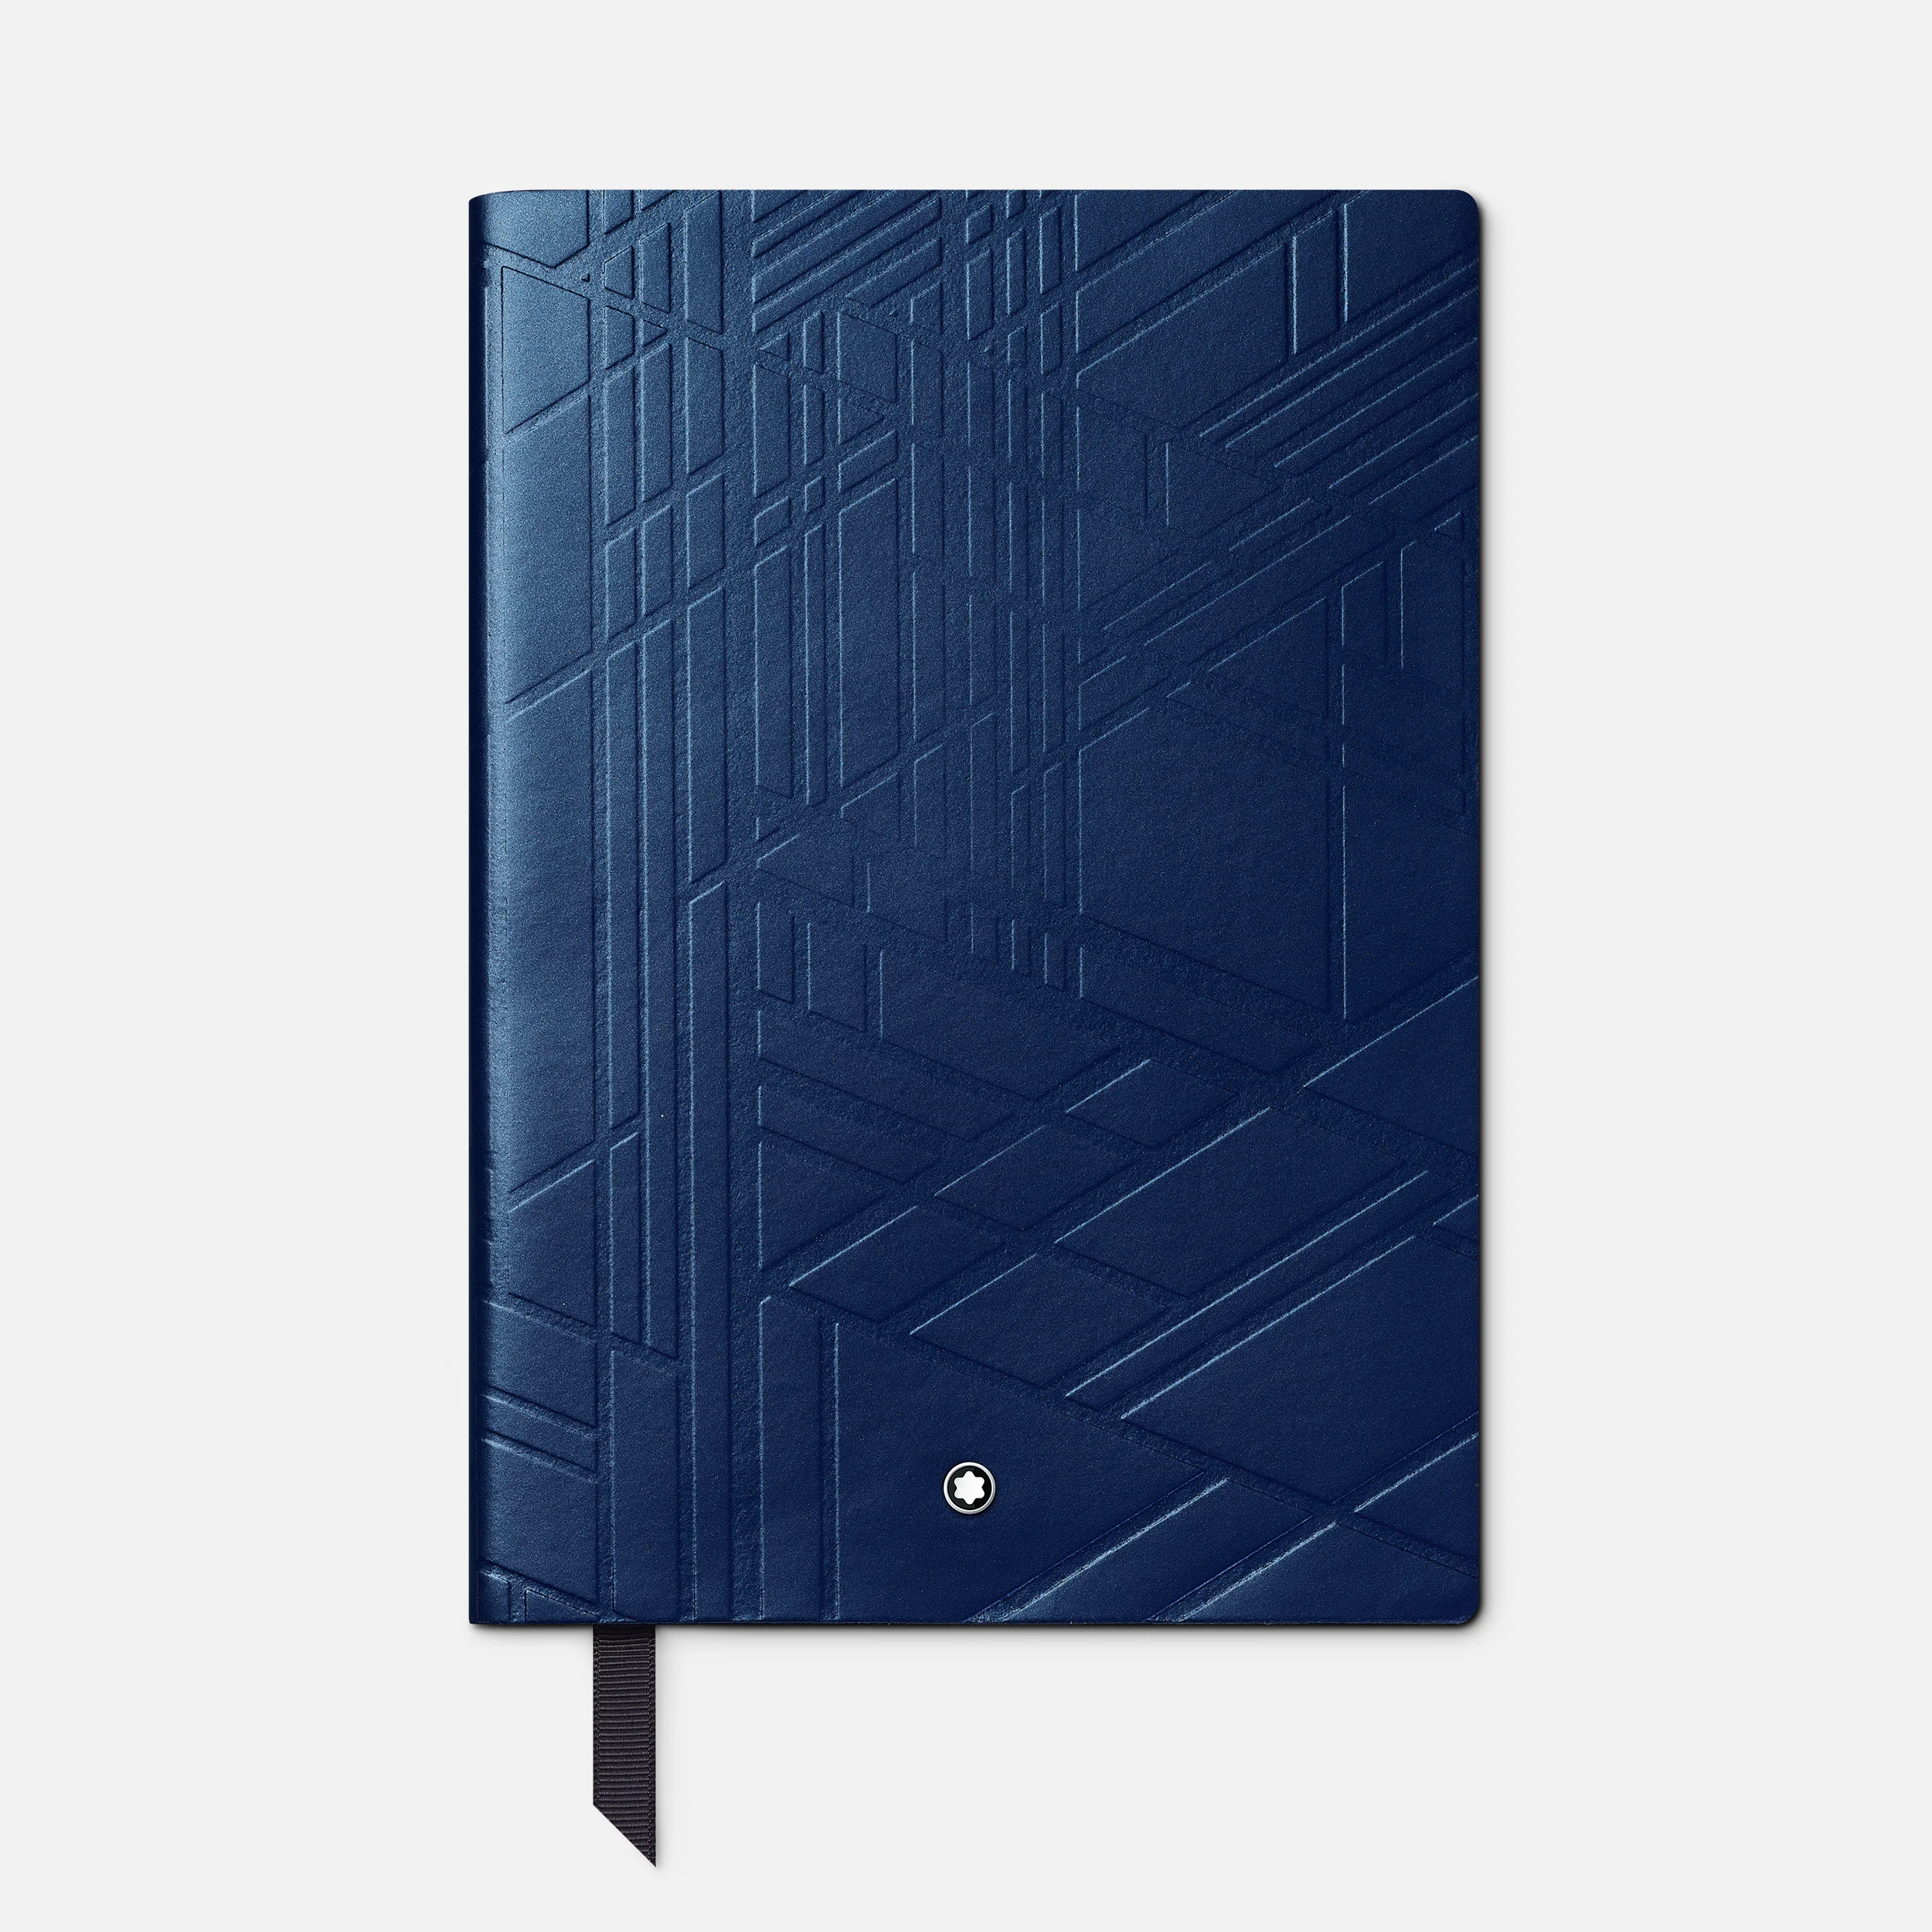 Montblanc Fine Stationery Notebook #146 Starwalker SpaceBlue - Pencraft the boutique